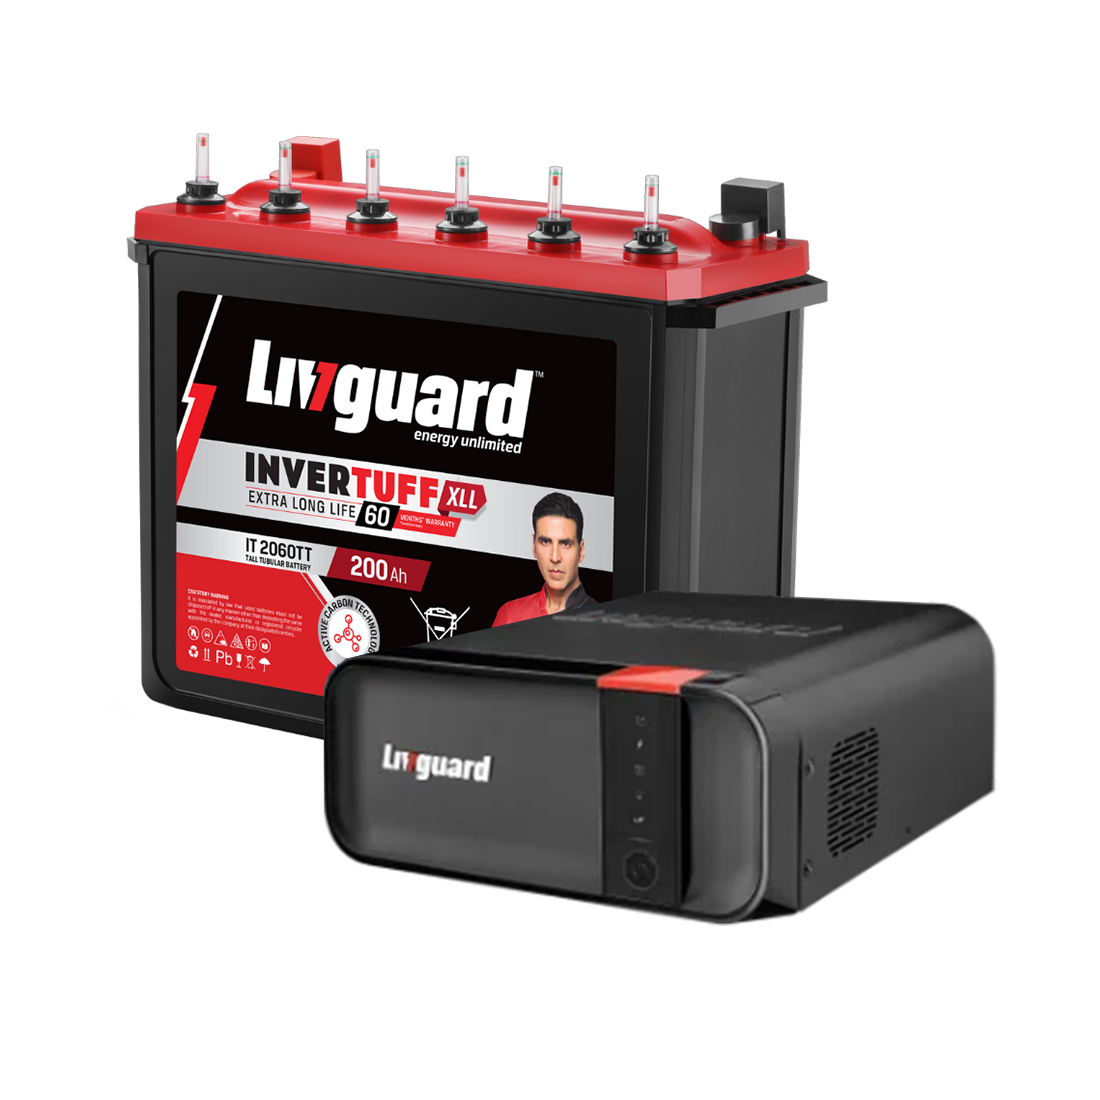 Livguard Inverter Battery 150ah at best price in Bakewar by Shanker Sons |  ID: 2852962877148